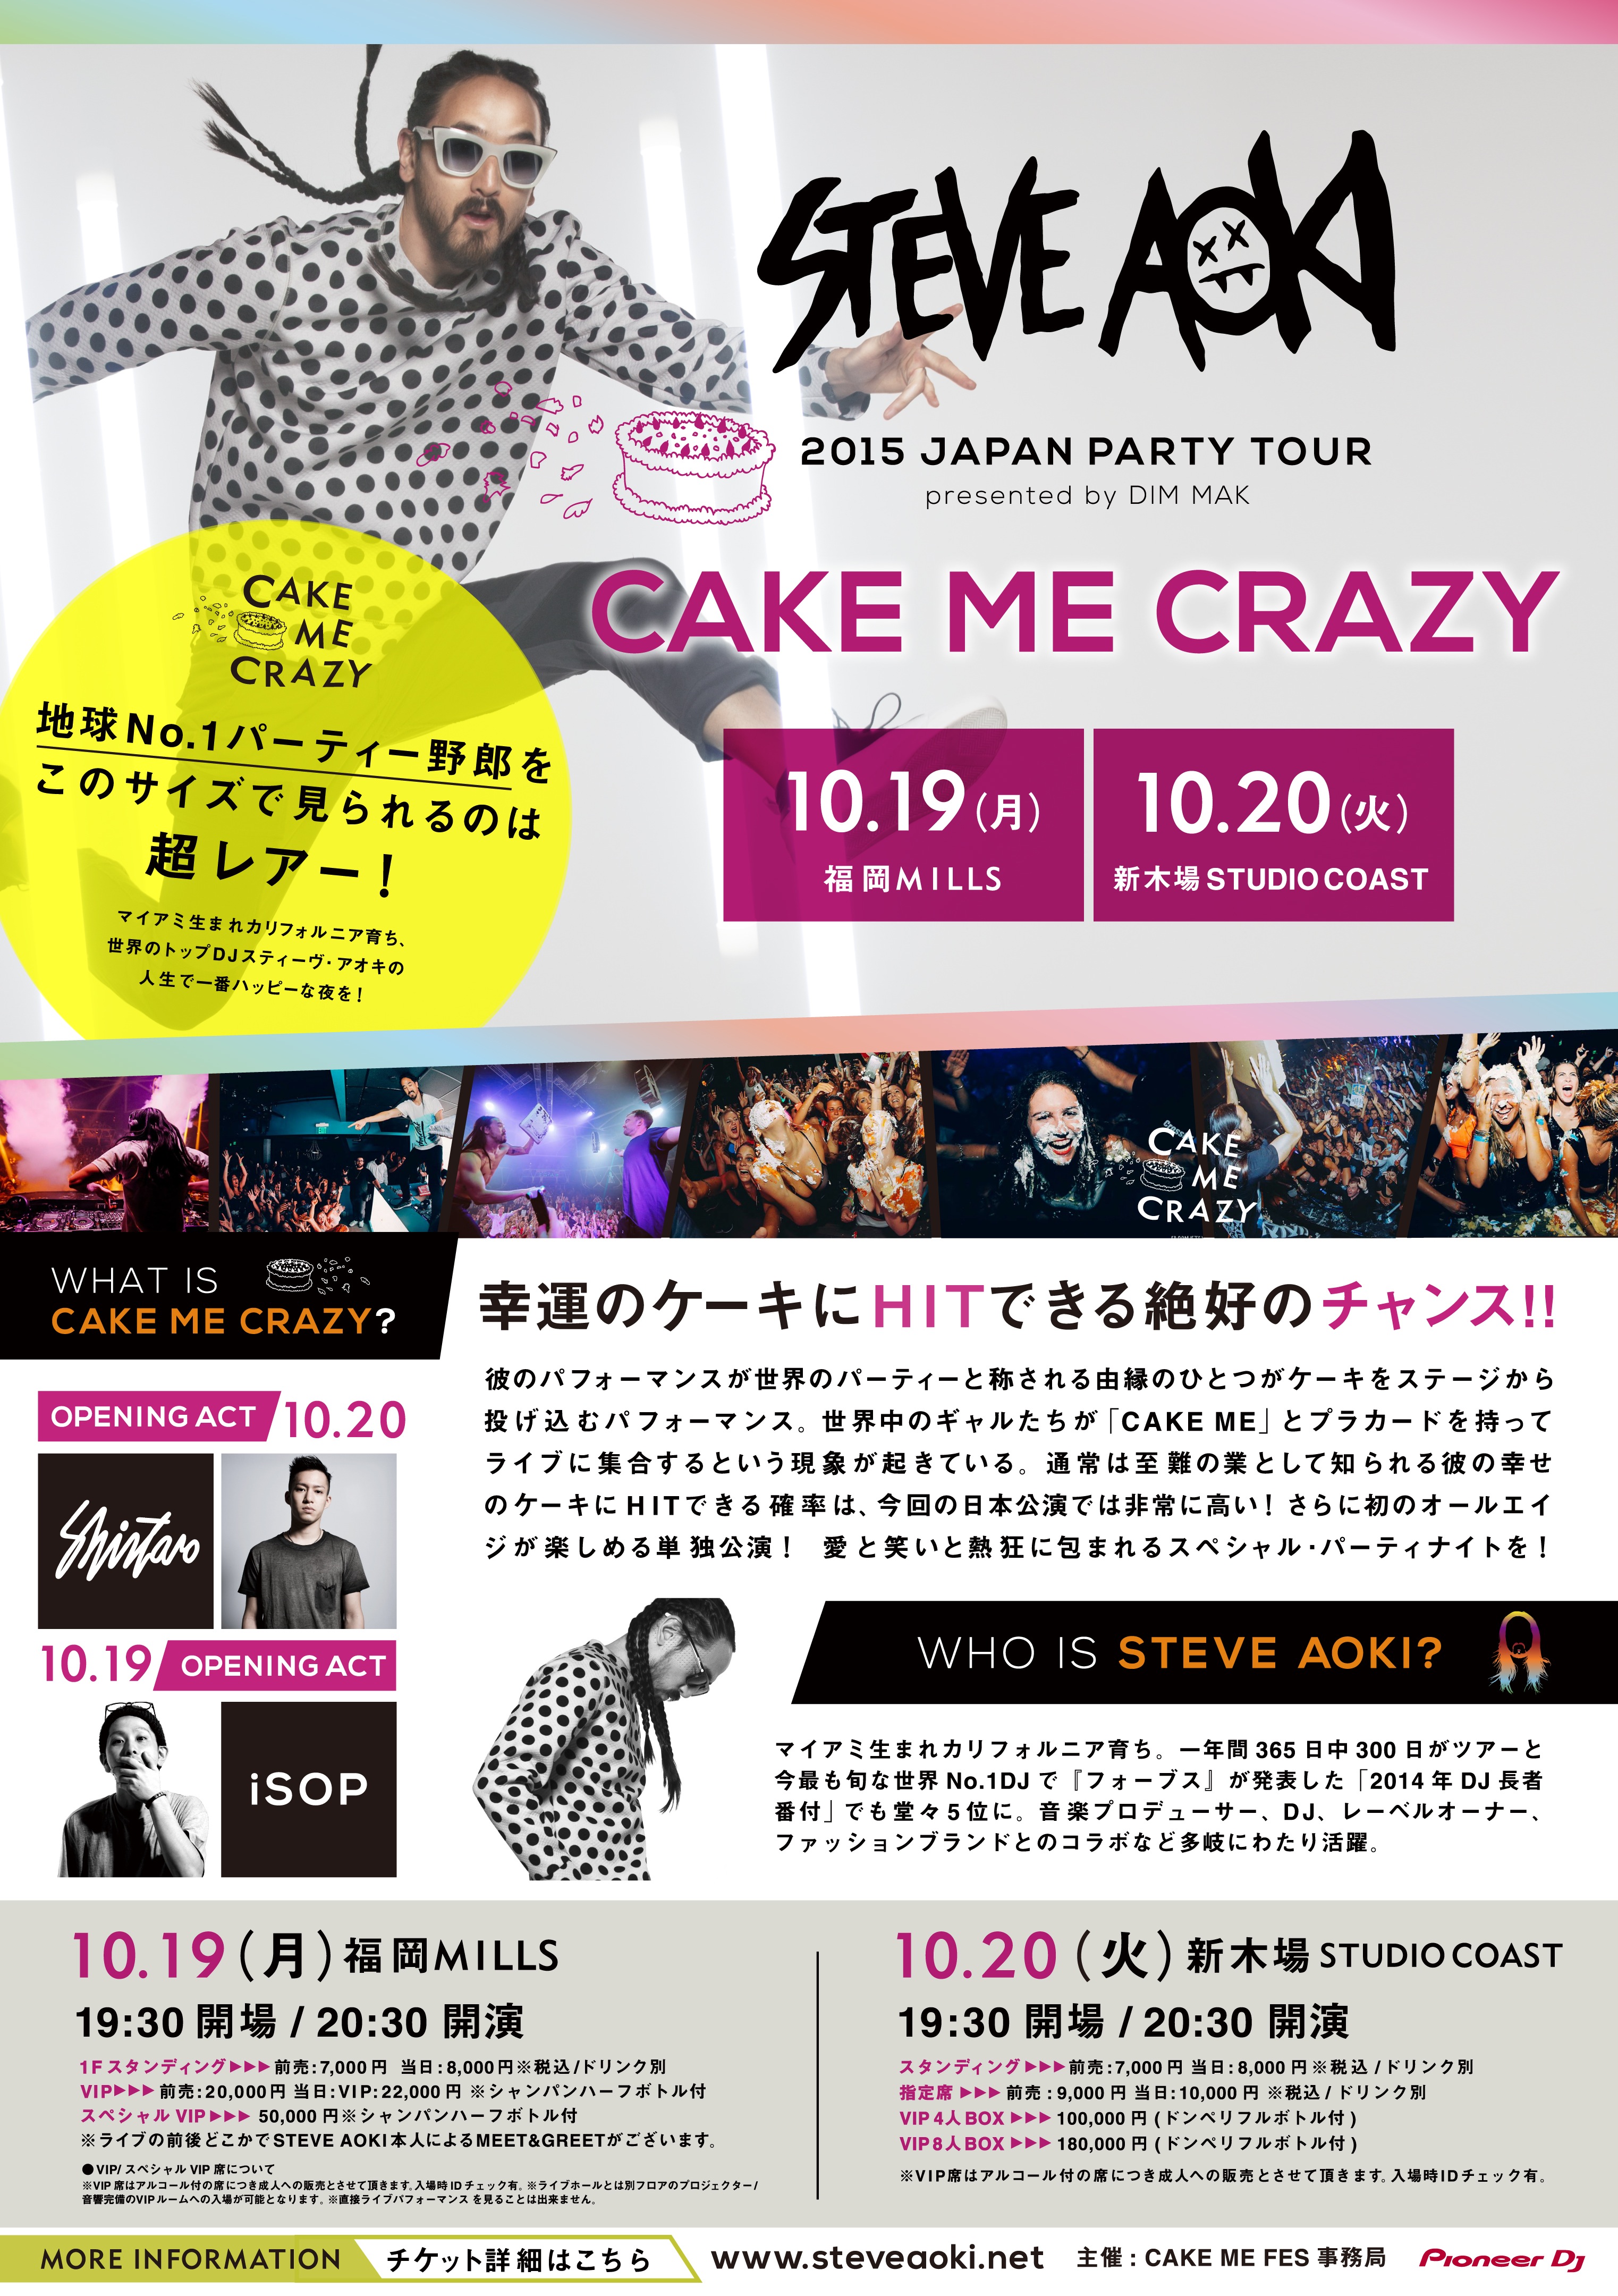 STEVE AOKI 2015 JAPAN PARTY TOUR “CAKE ME CRAZY” presented by DIM MAK